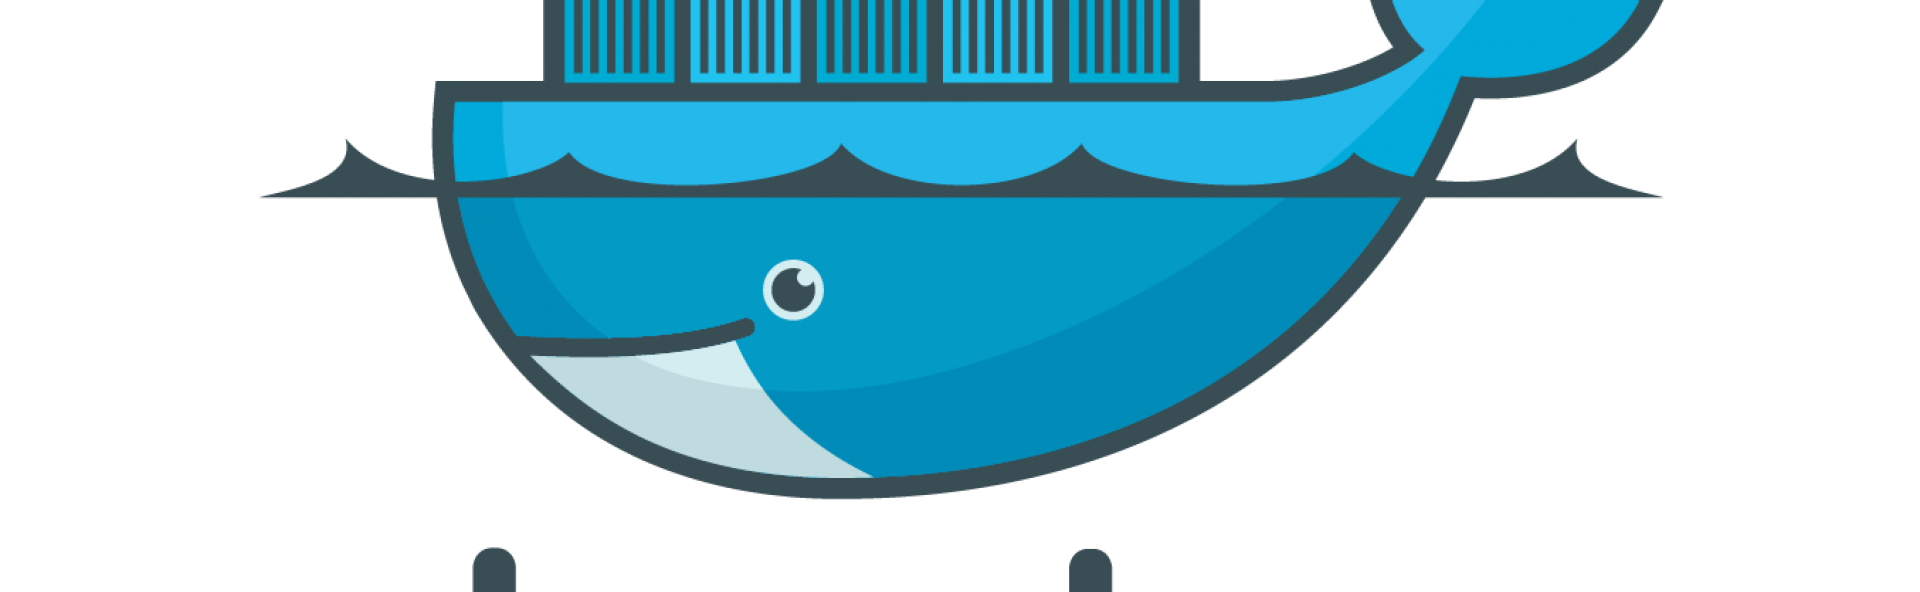 Docker Logo - Start Your Adventure With Docker Console